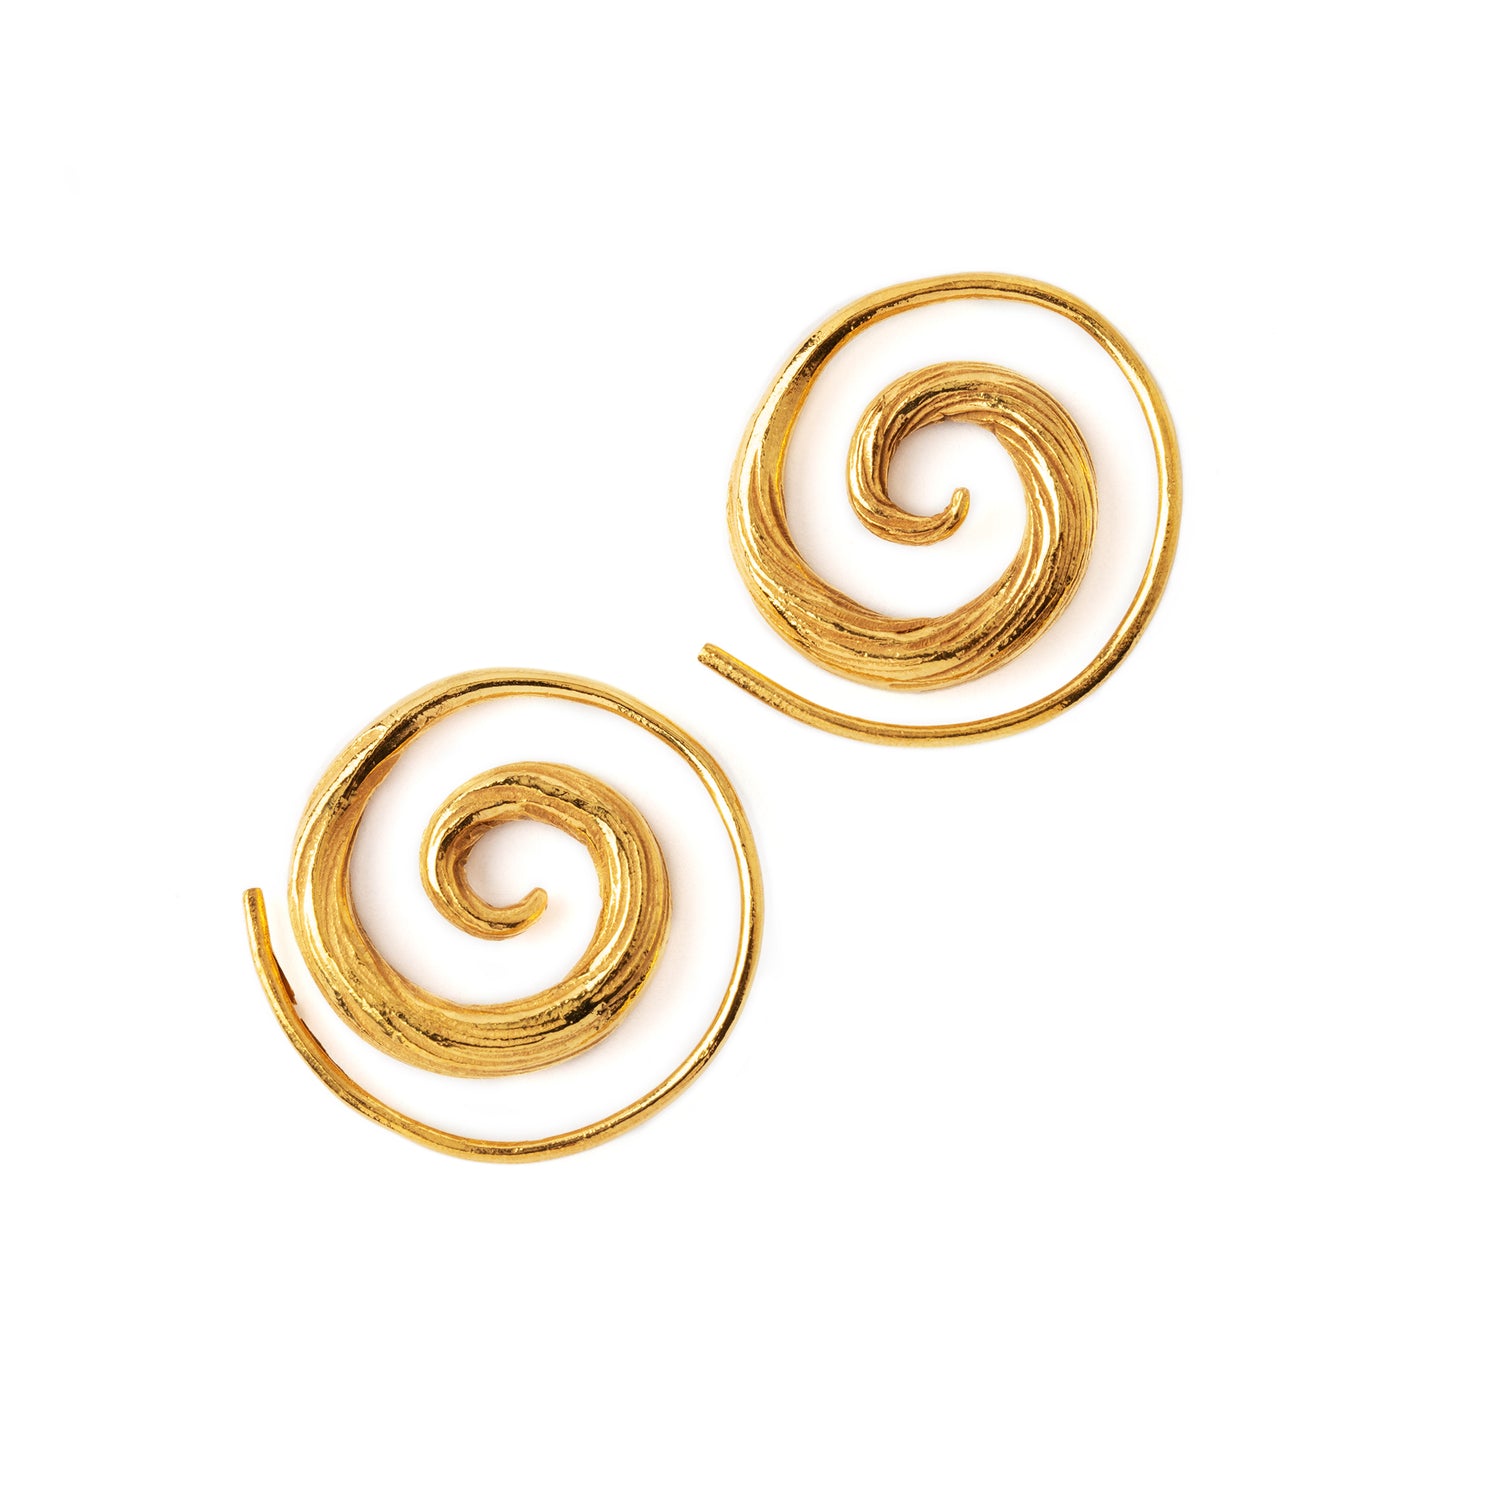 El Nino Gold Spiral Earrings frontal view